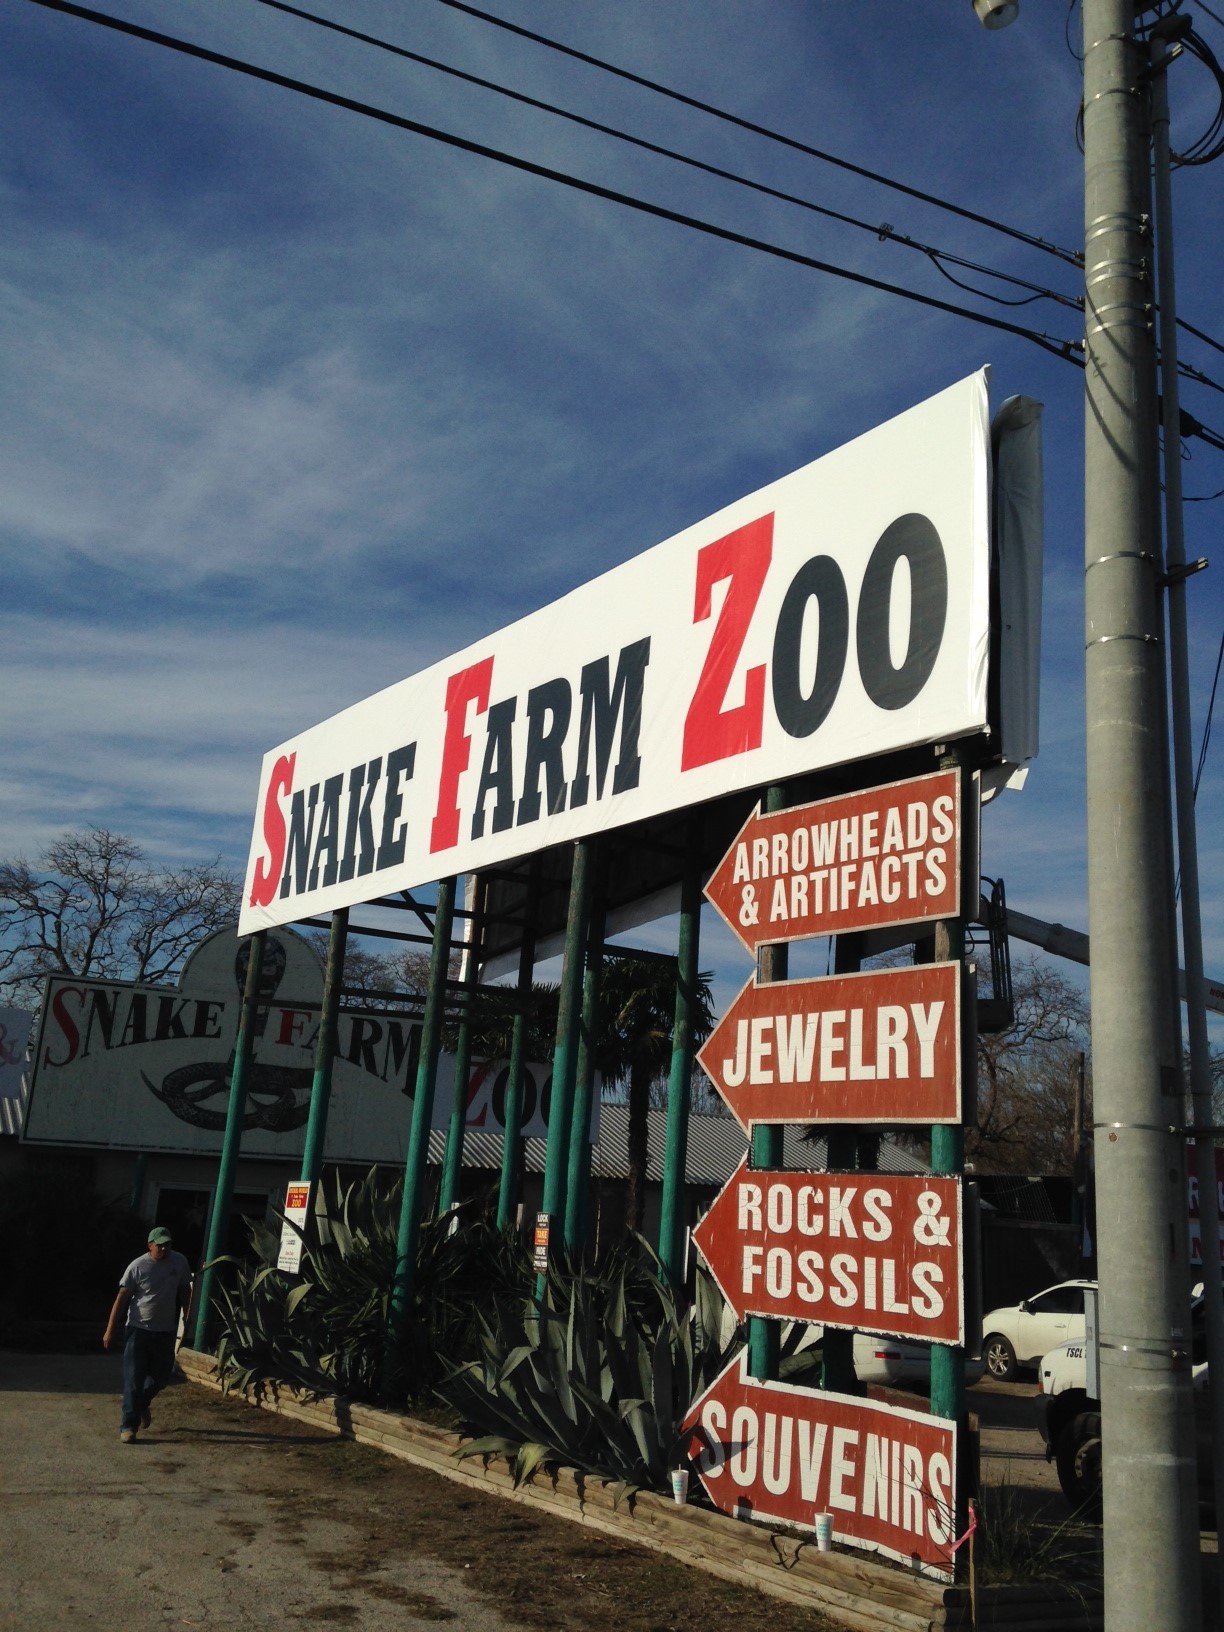 exterior-business-sign-snake-farm-satx